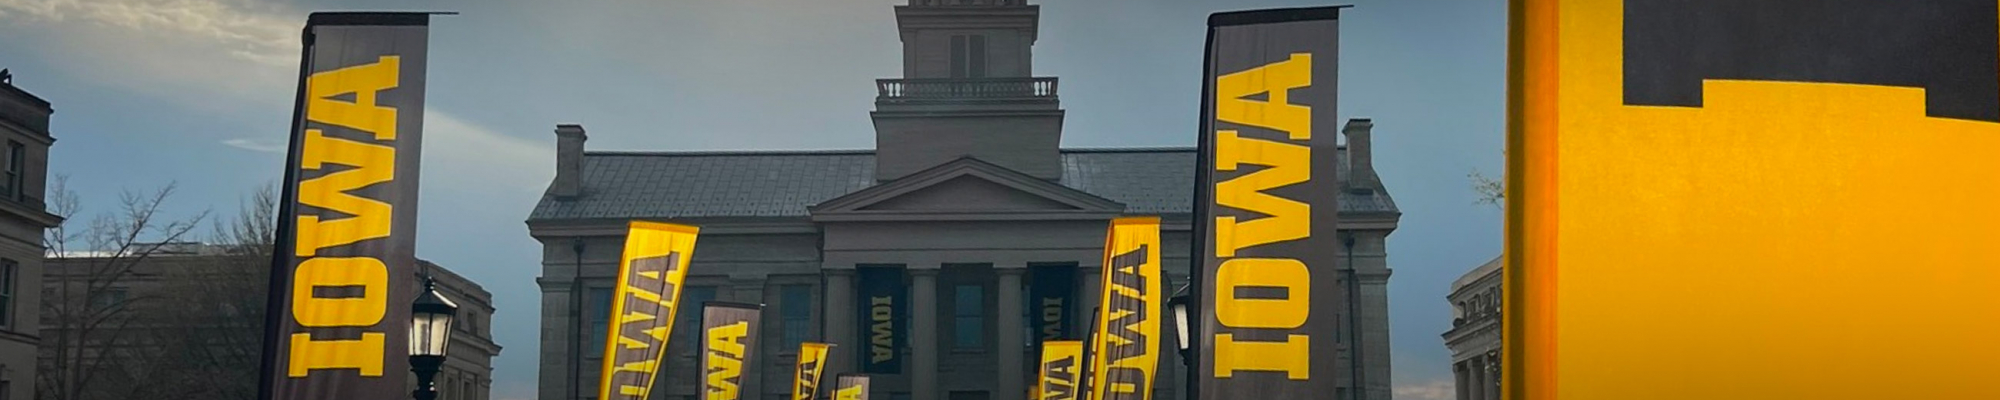 University of Iowa Campaign